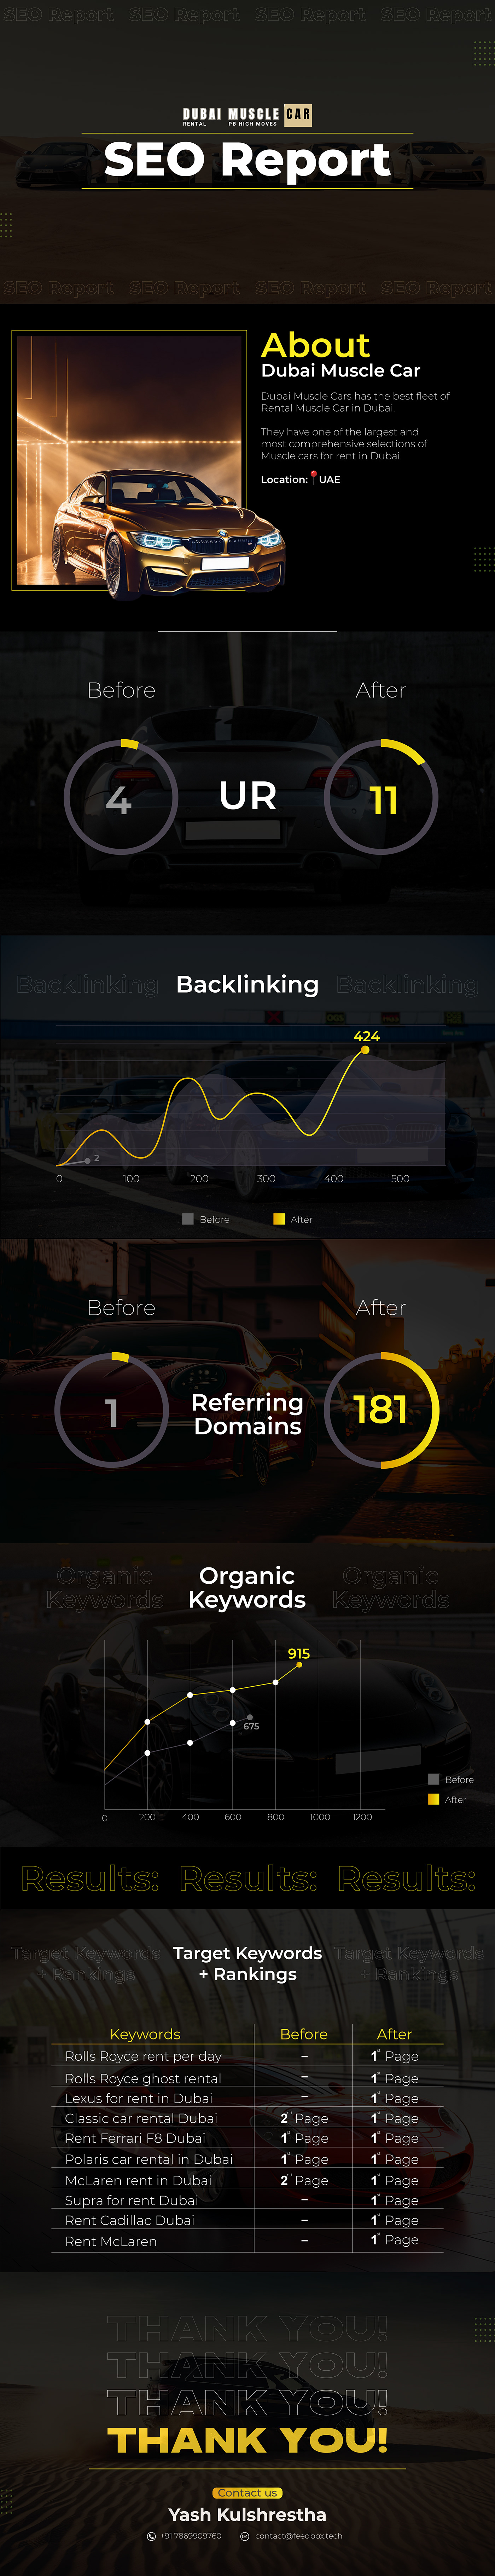 SEO Report | Dubai Muscle Car | Rental Cars | Search Engine Optimizatio by Feedbox Marketing Agency 